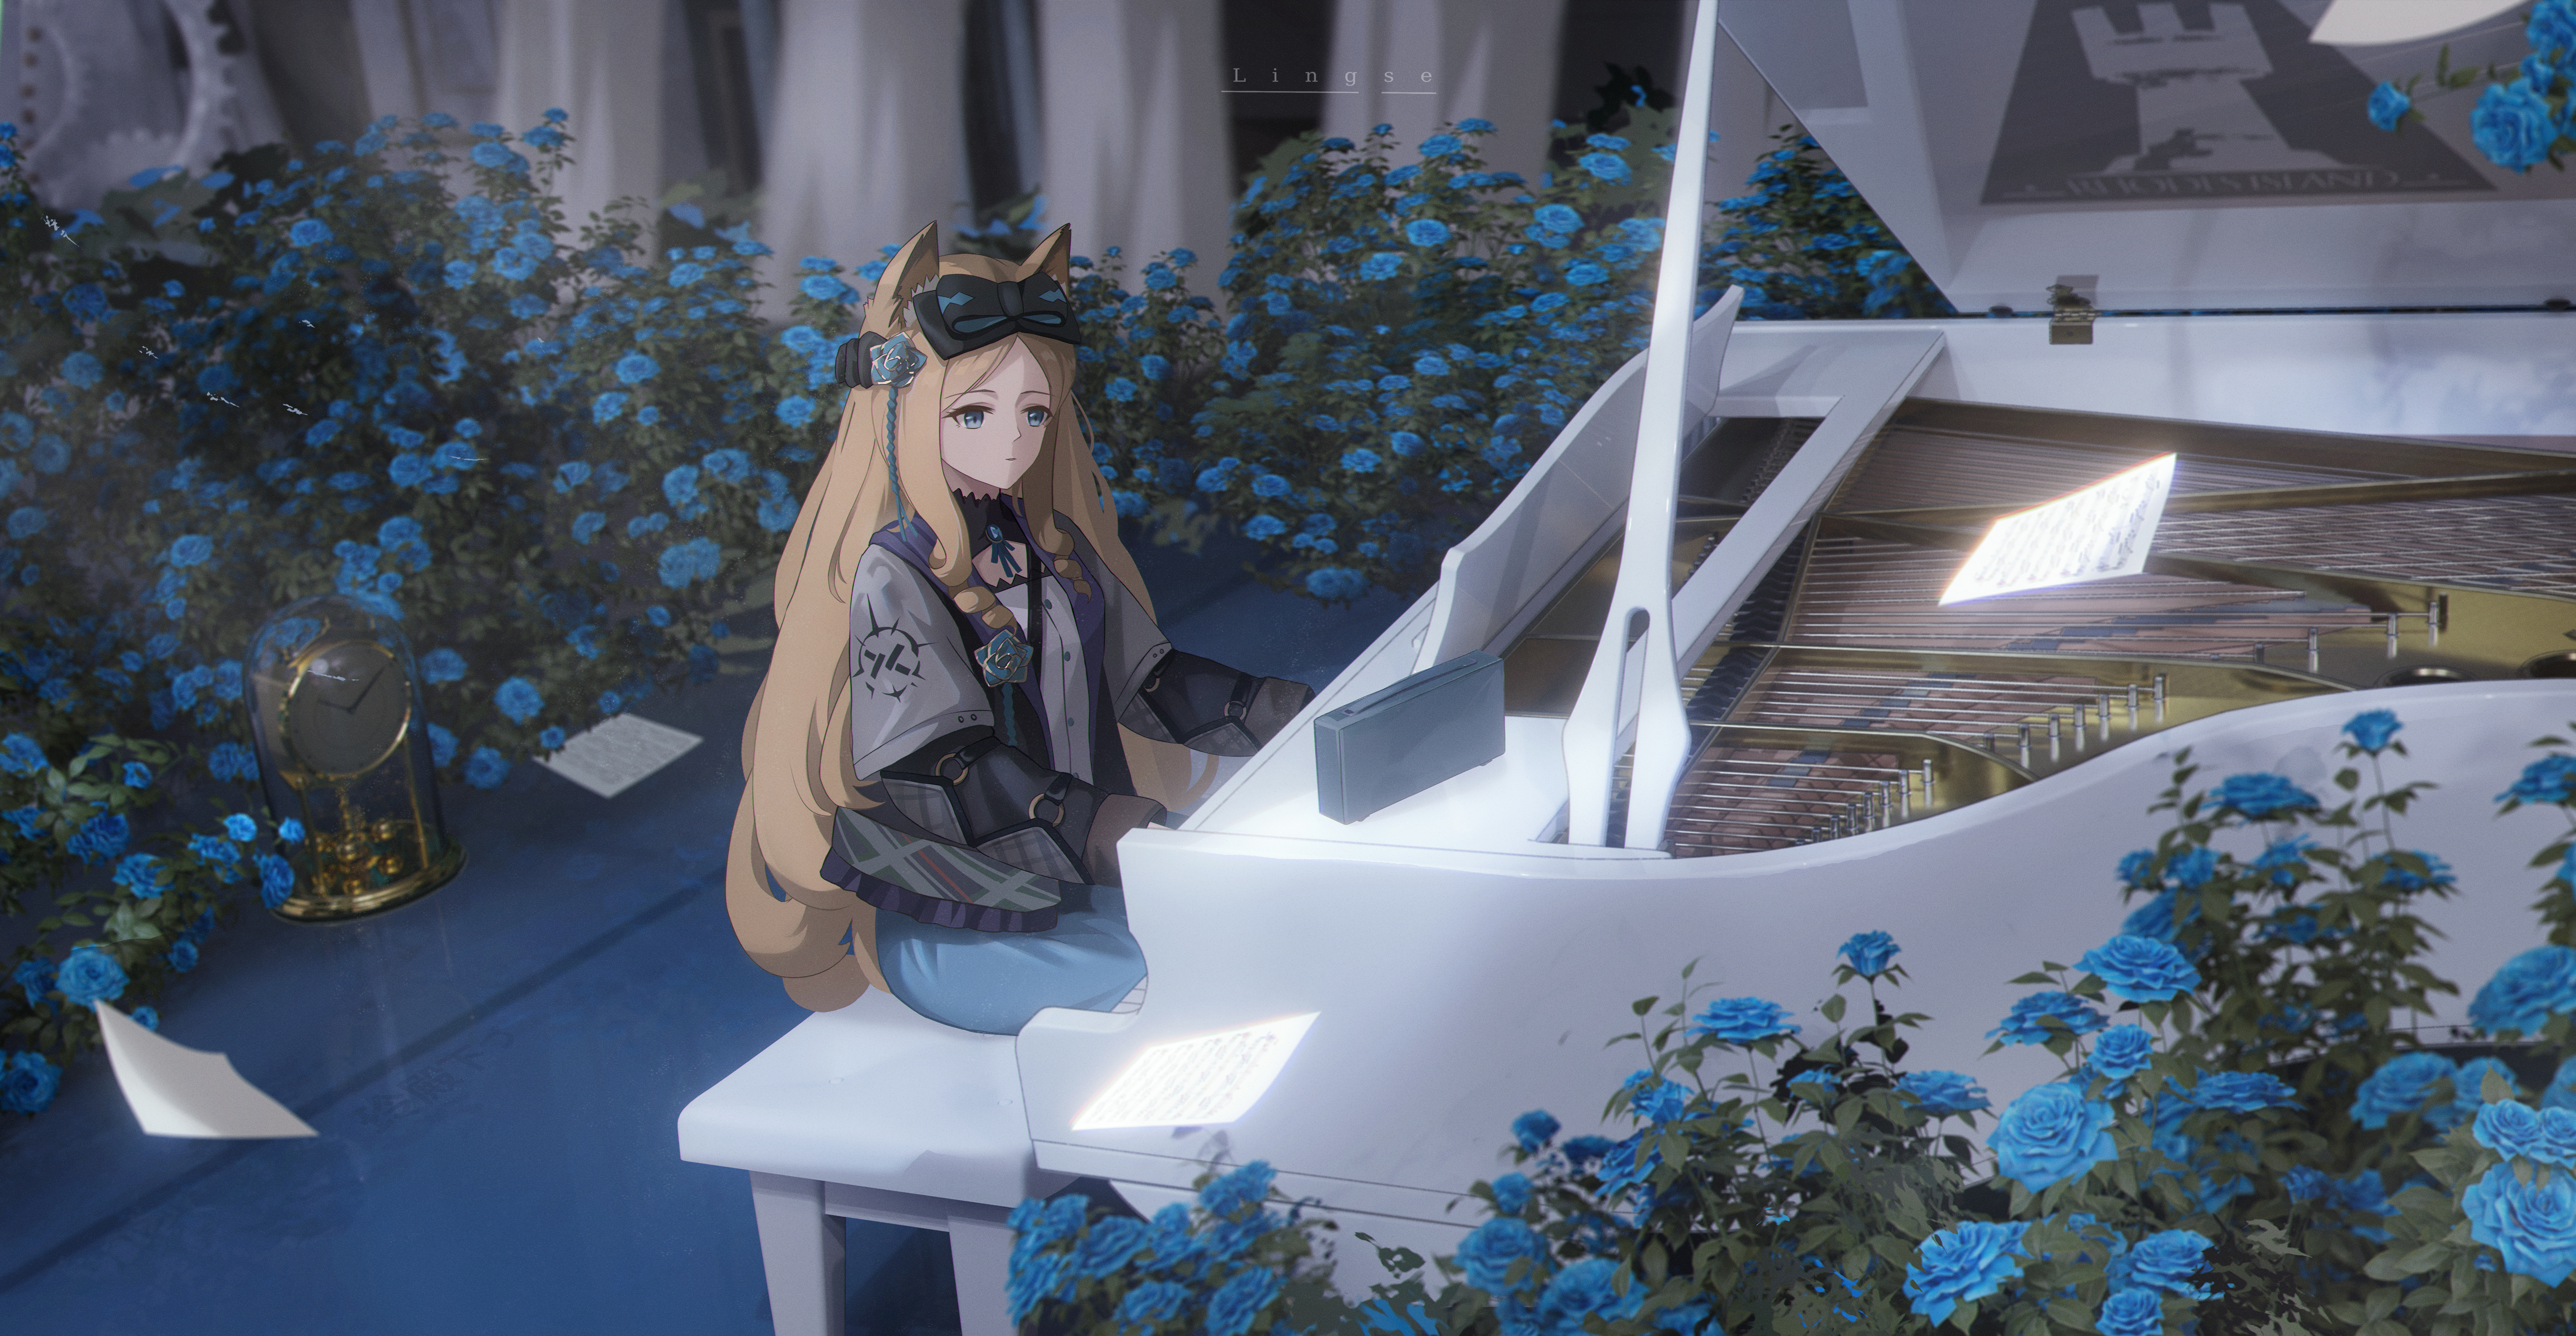 Anime 5400x2800 Arknights piano anime girls fox girl fox ears long hair blonde paper flowers blue rose rose blue eyes musical instrument